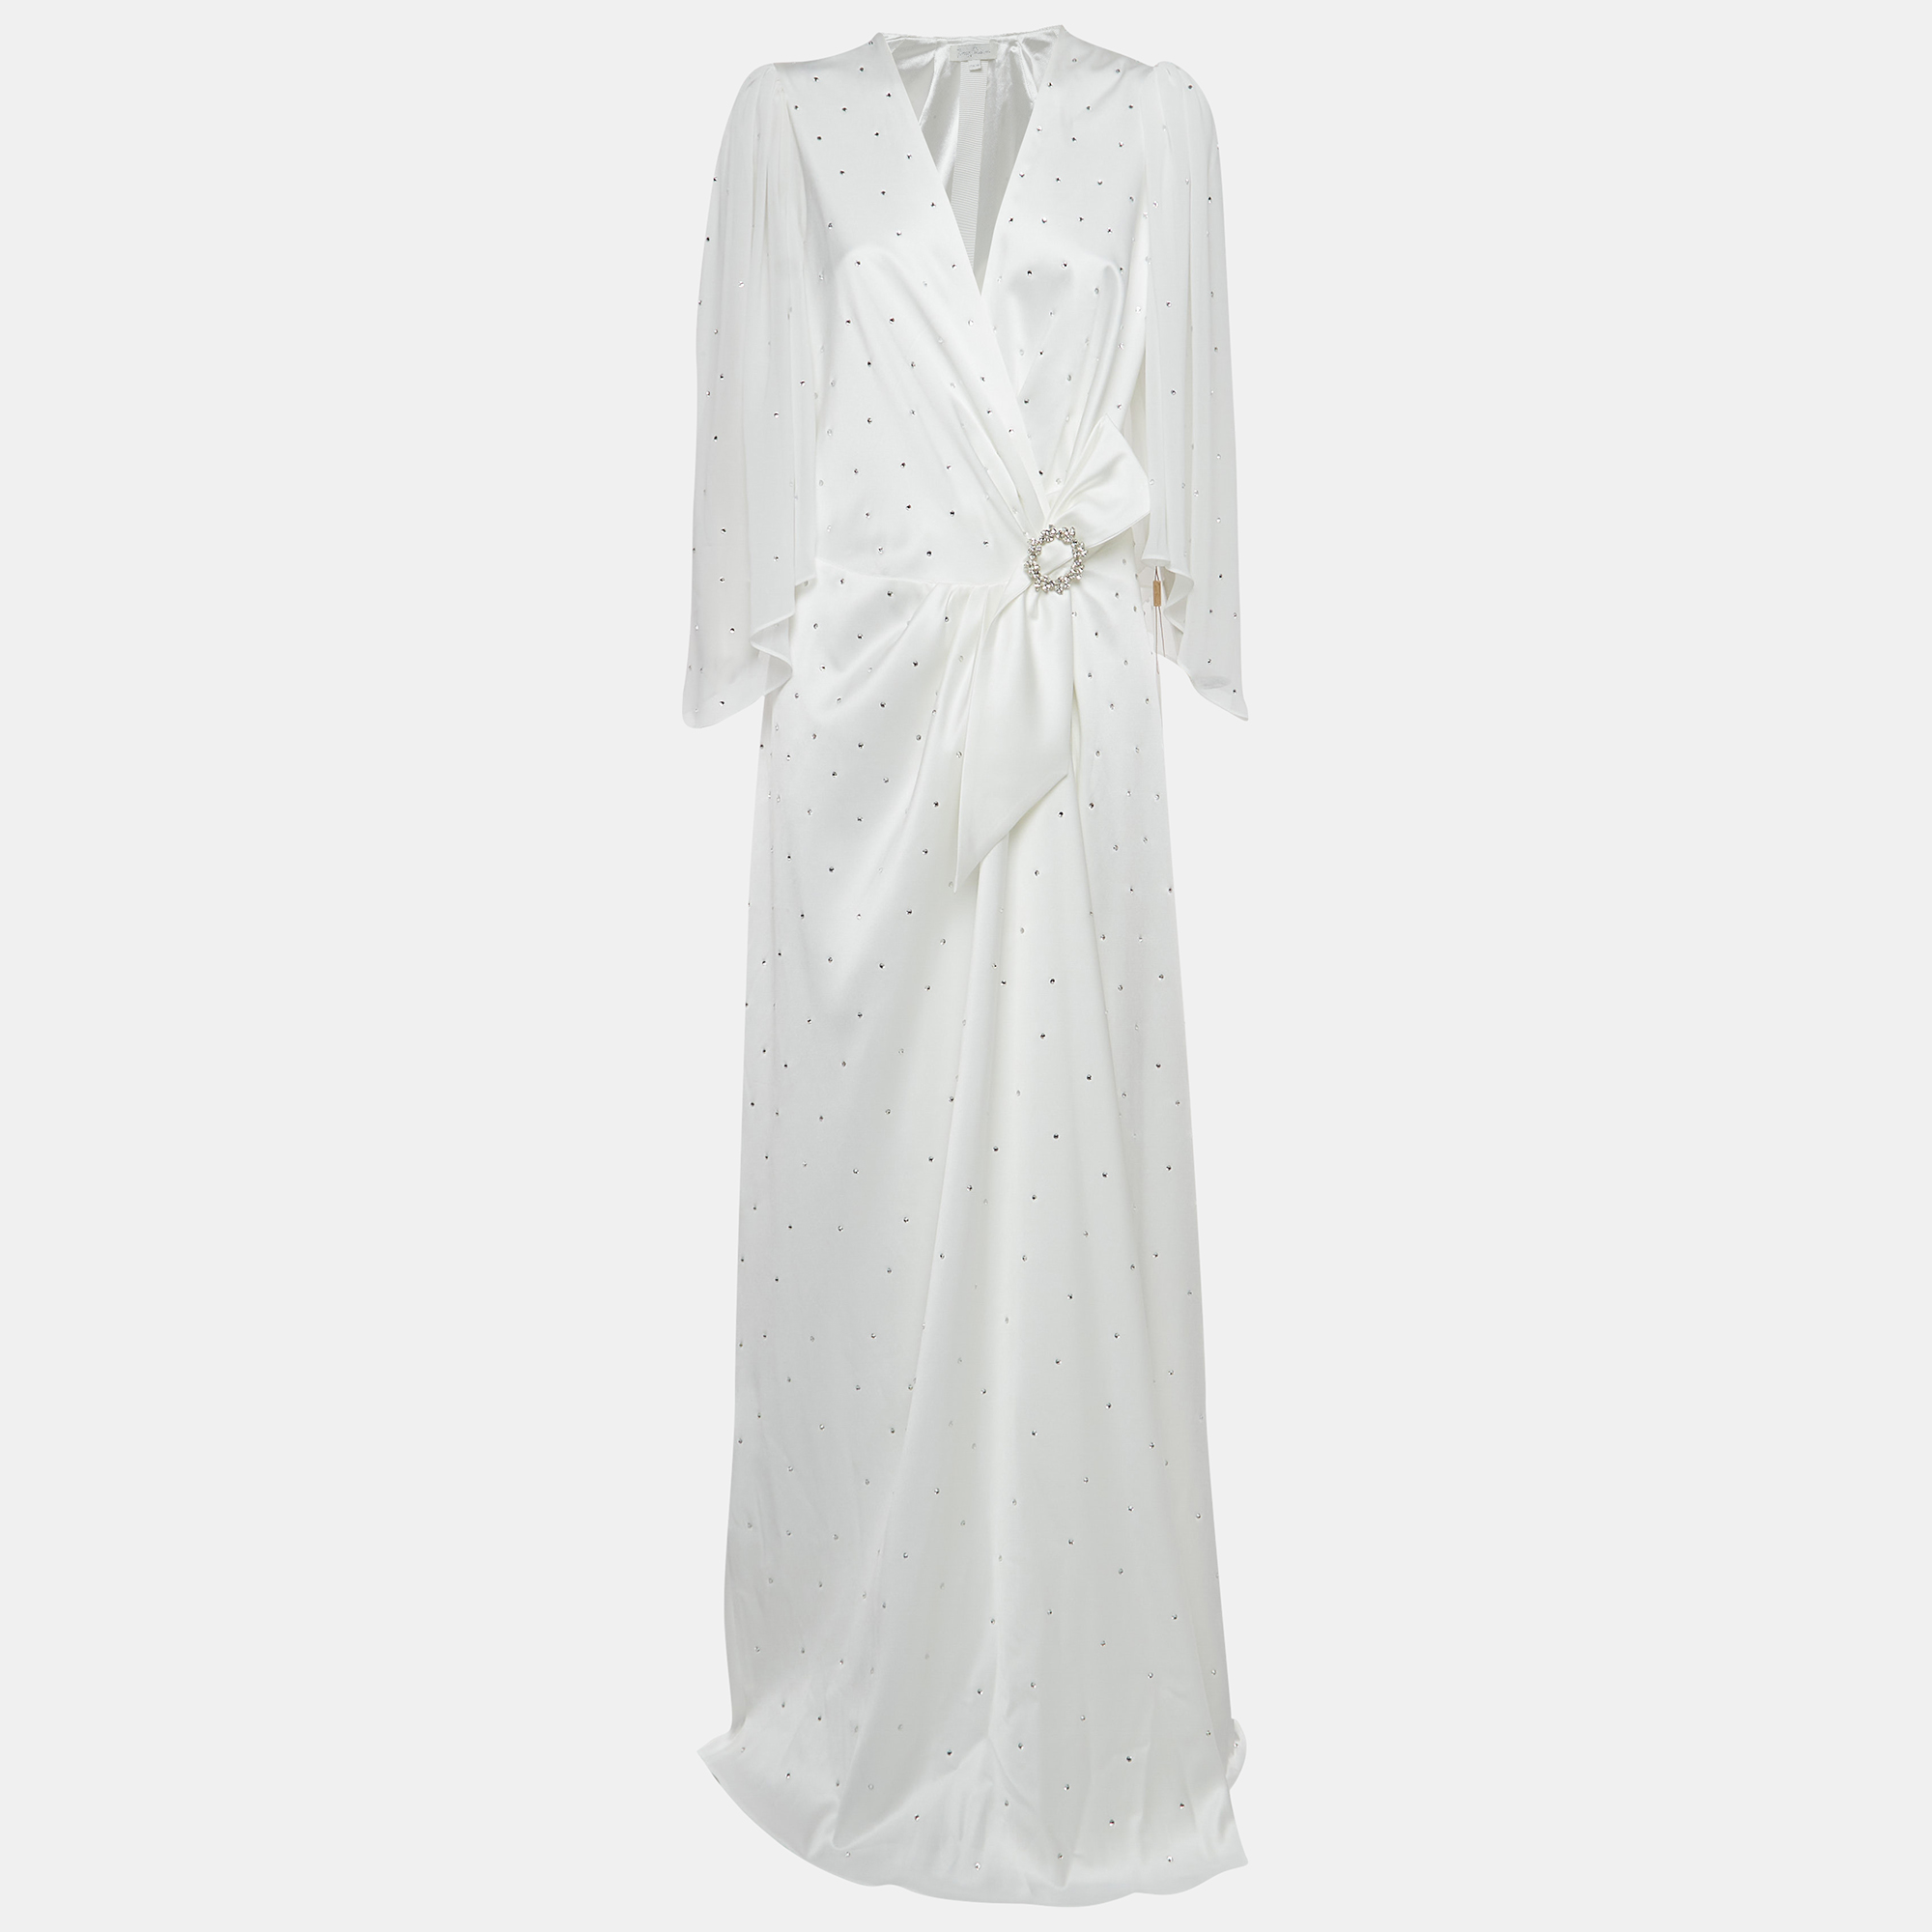 Jenny Packham Ivory White Satin Crystal Embellished Bridal Gown L